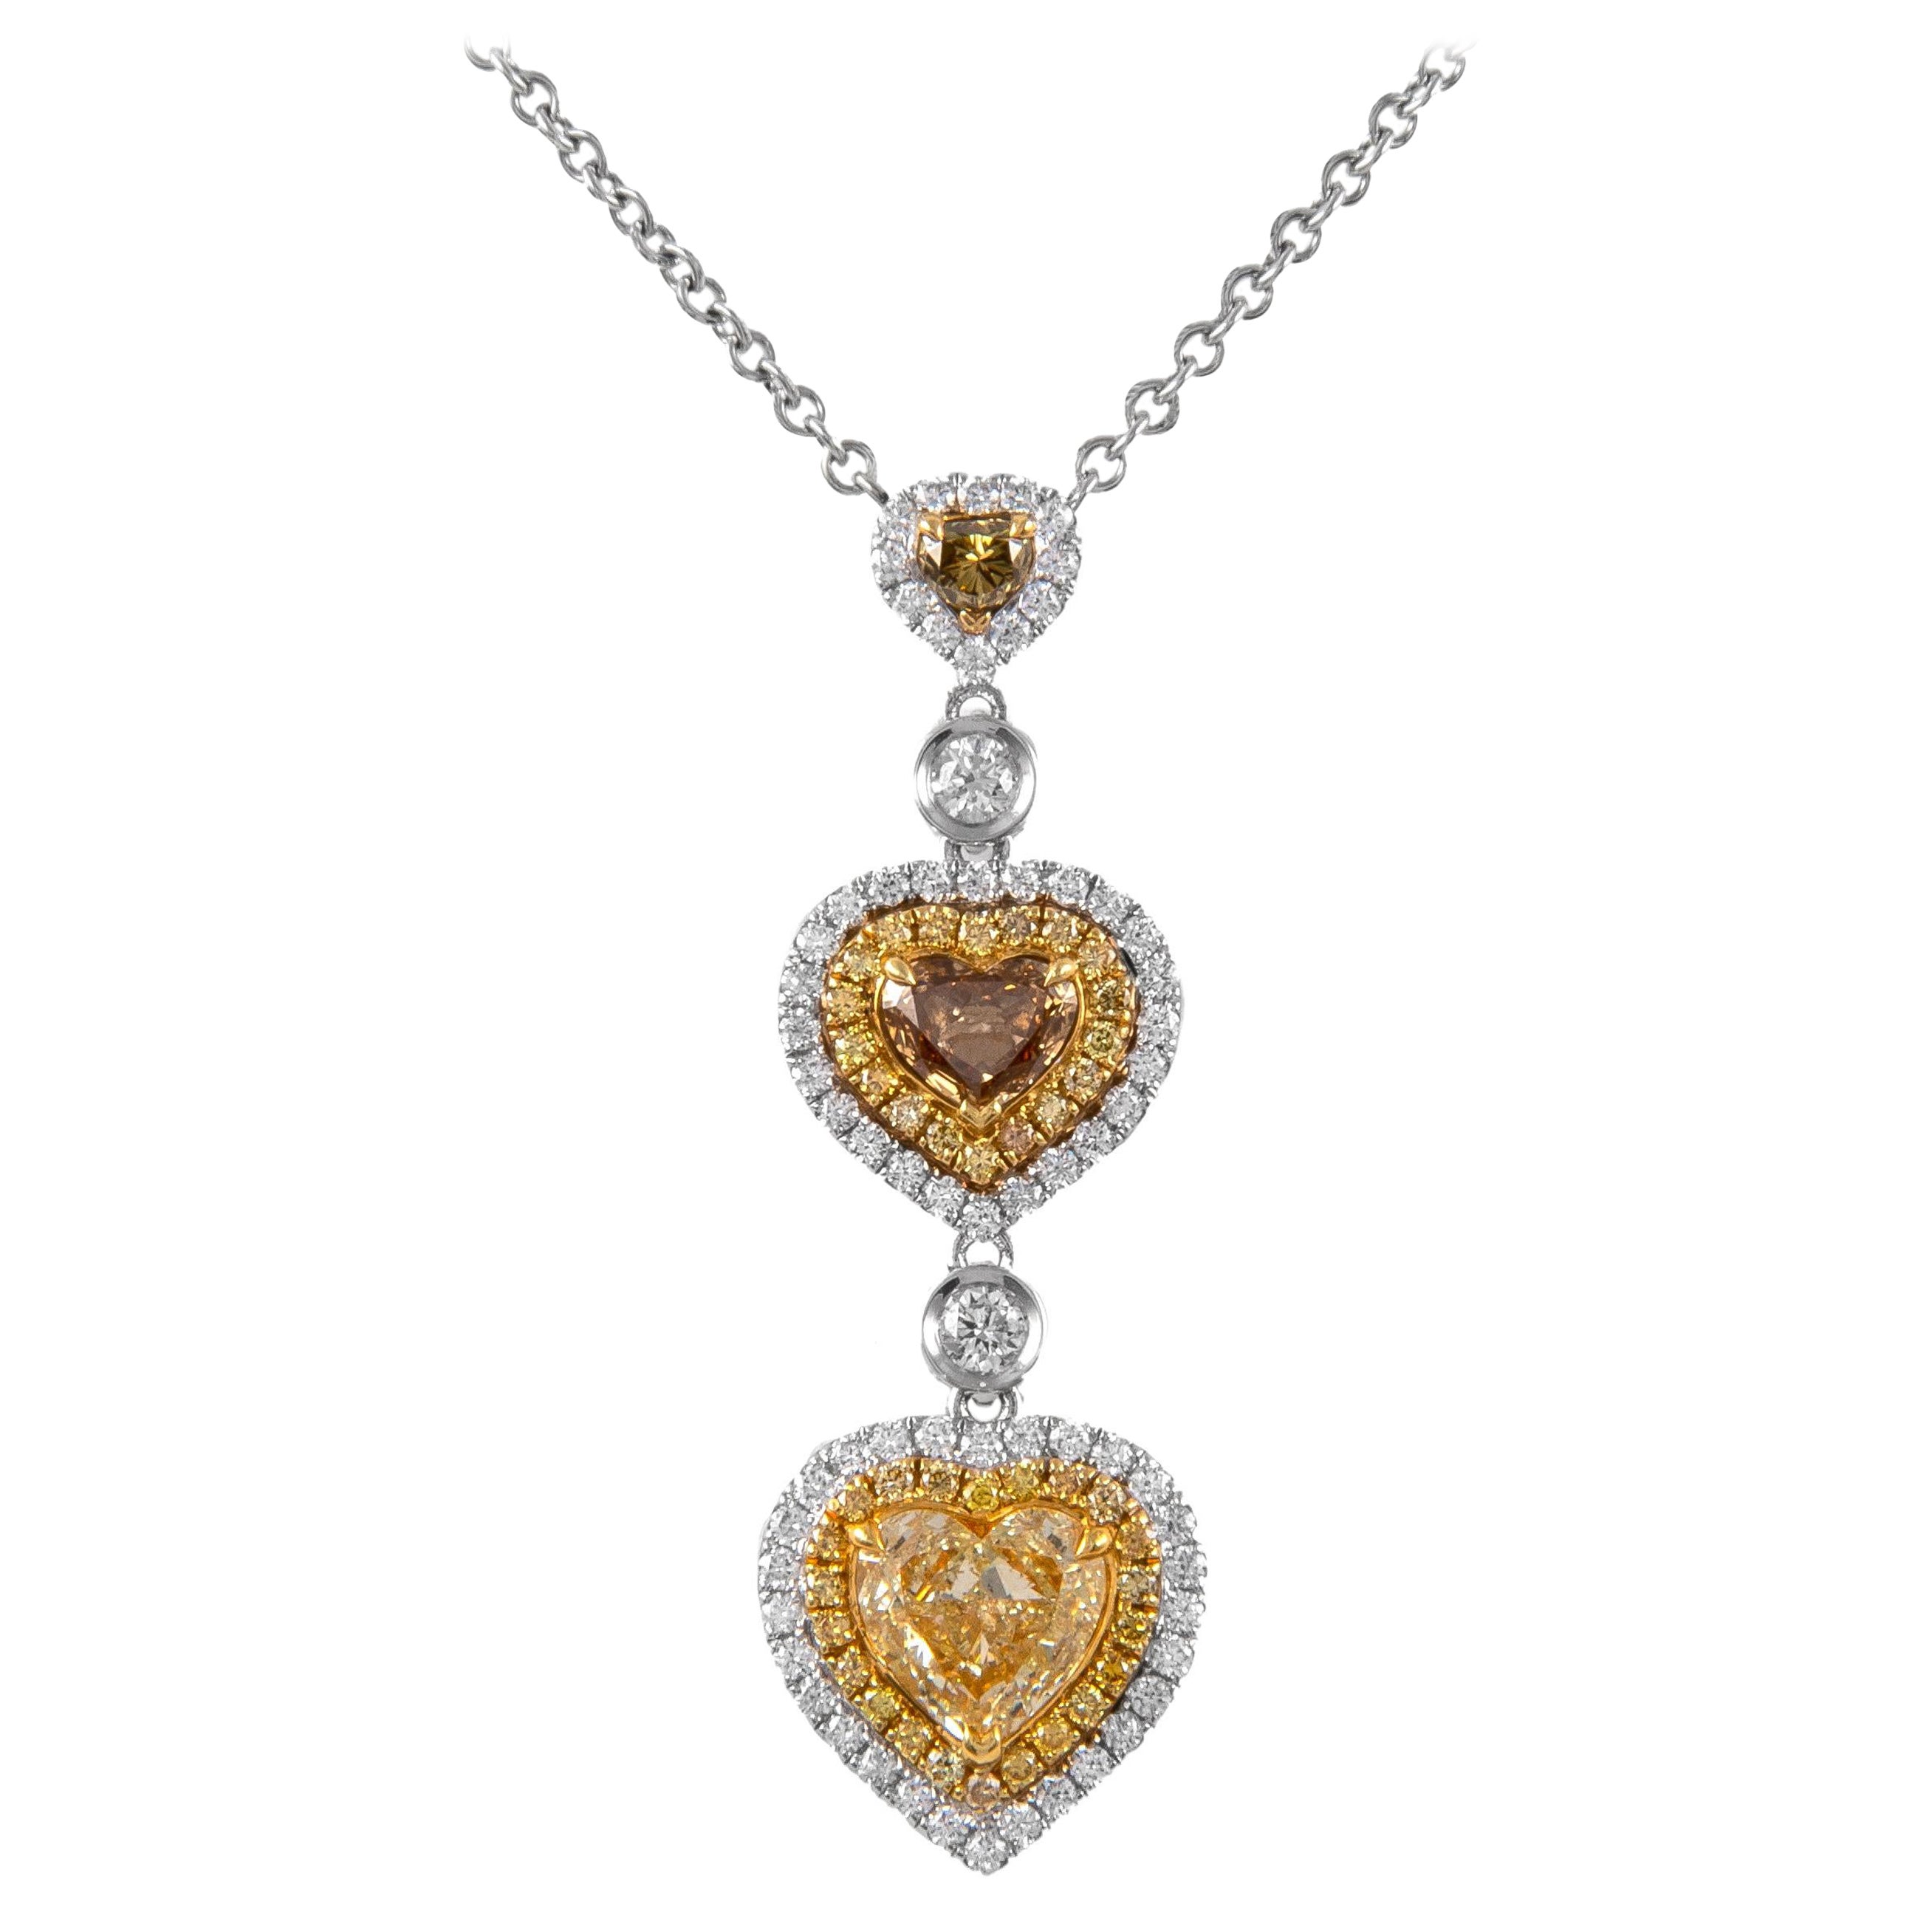 Alexander 3.54ctt Fancy Color Diamond Drop Necklace 18k White & Yellow Gold For Sale